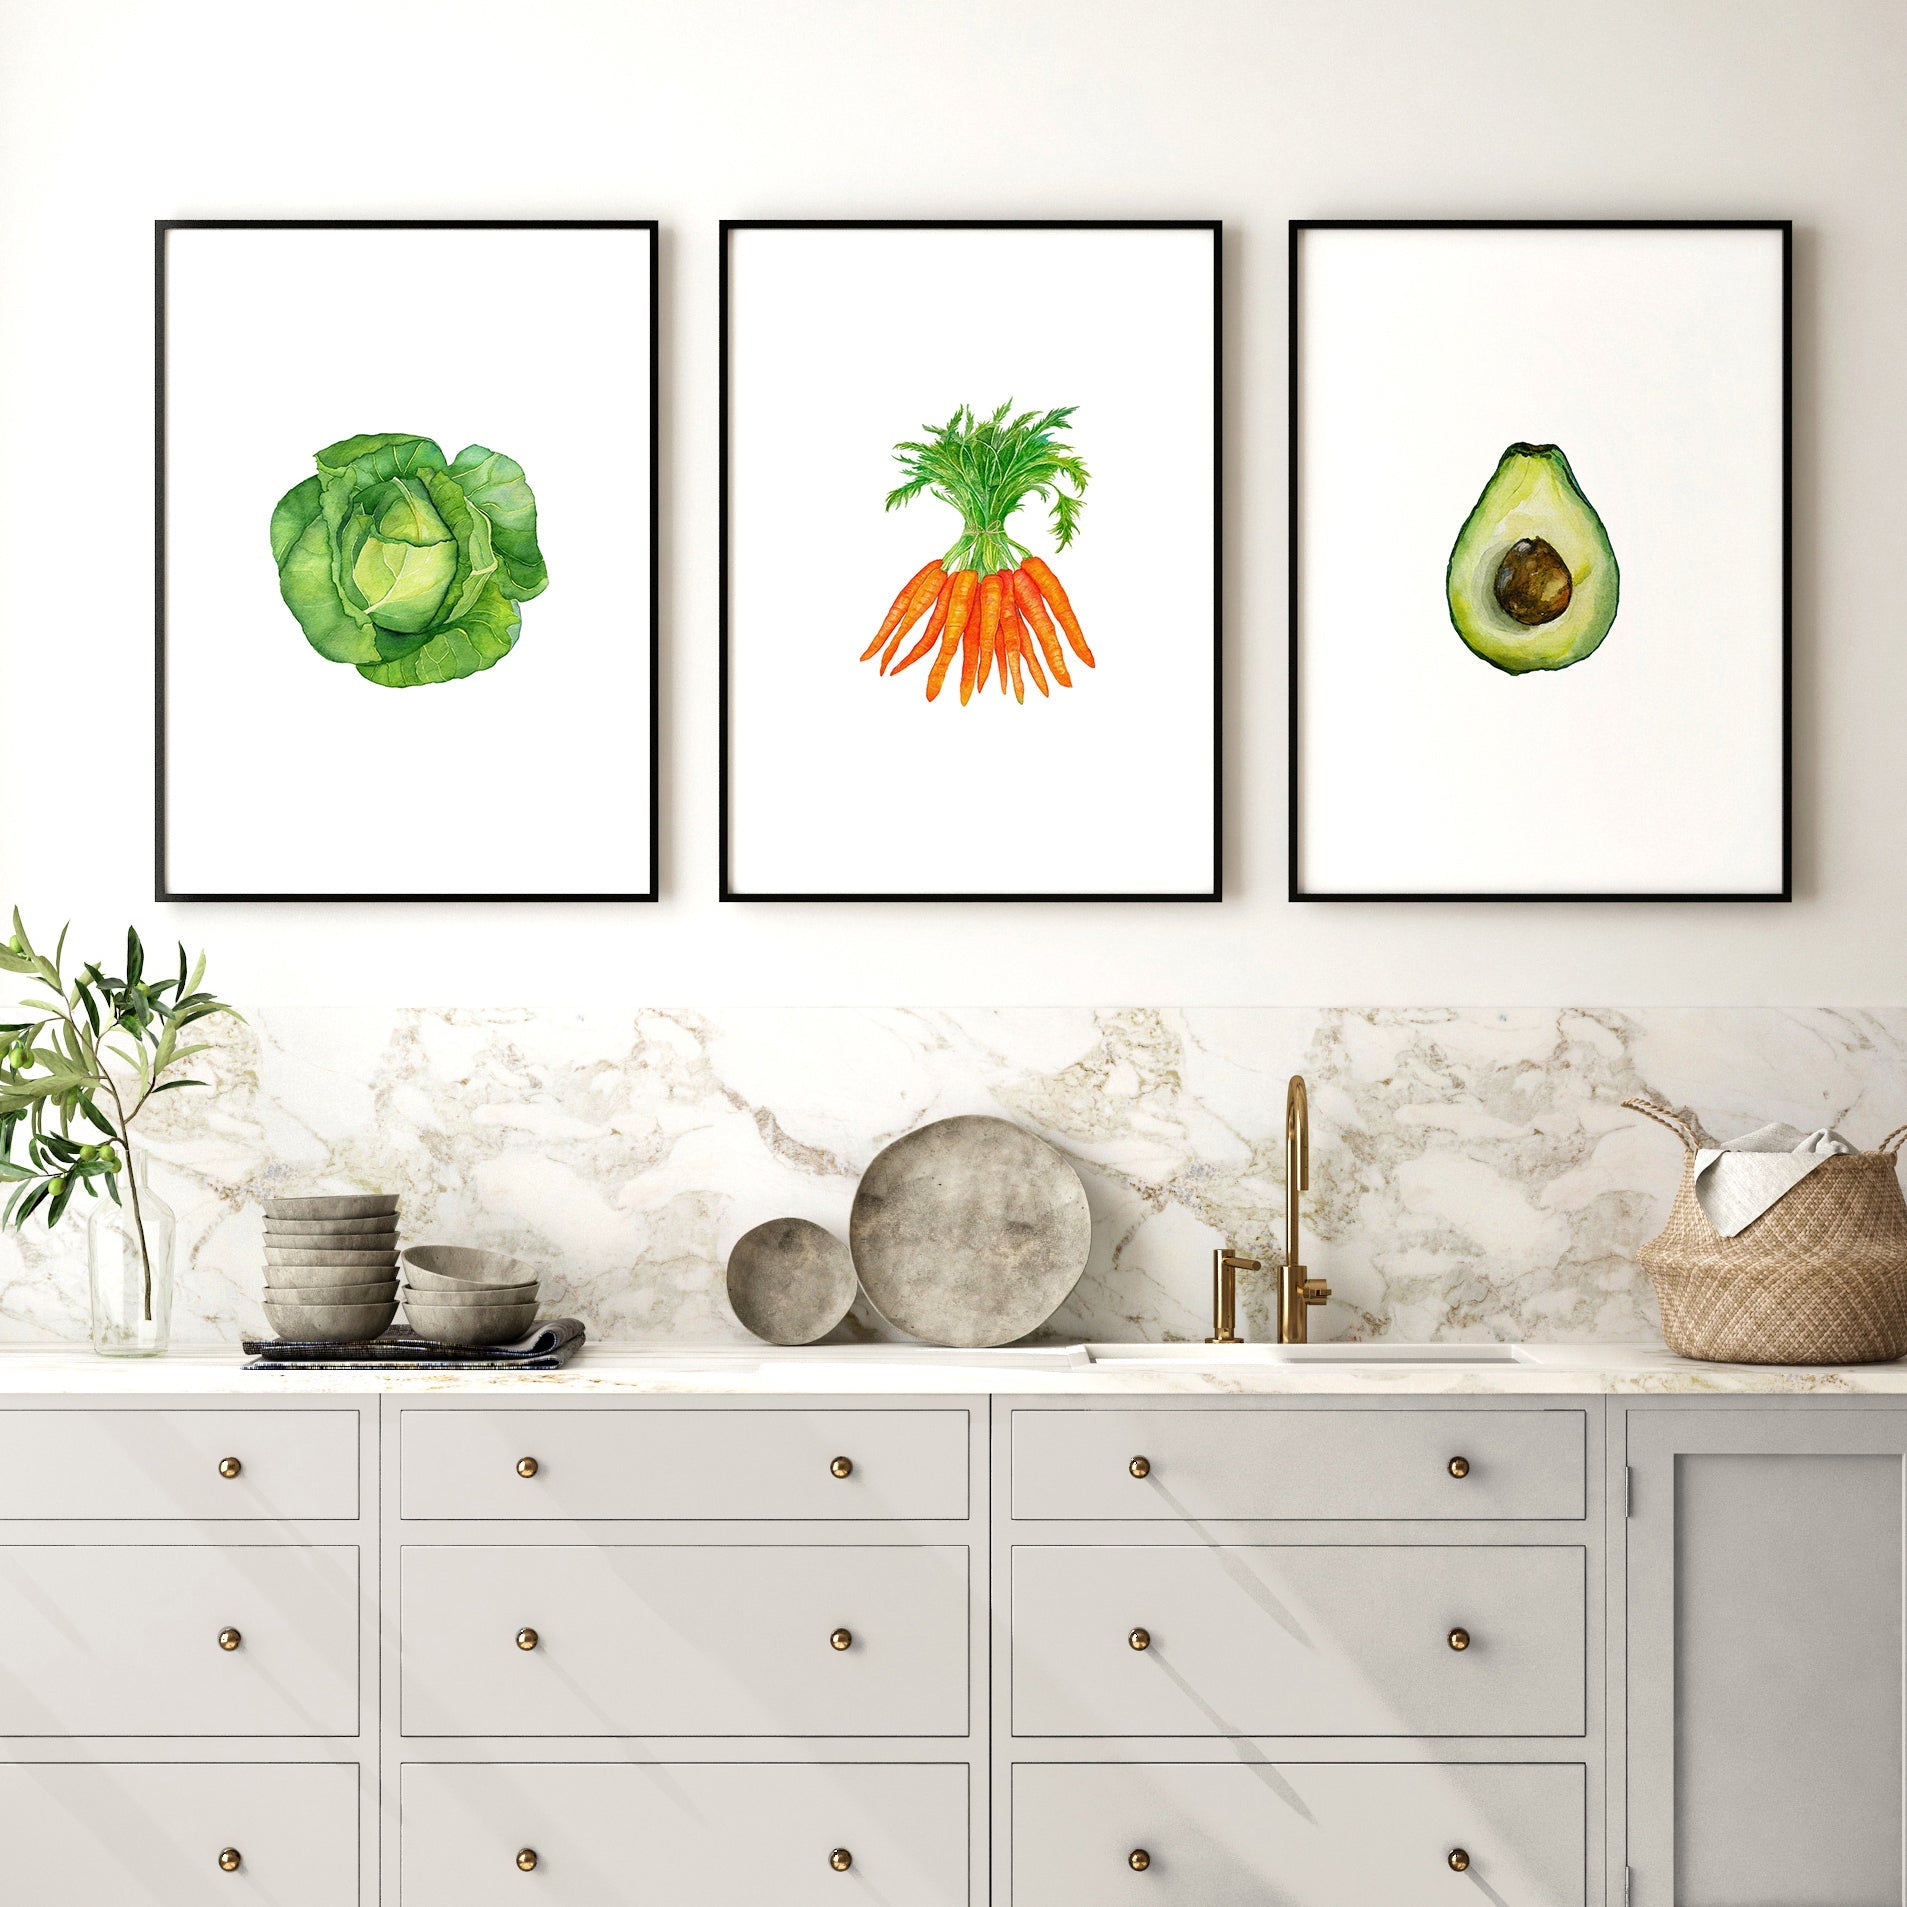 Artwork for the kitchen | Set of 3 framed wall art